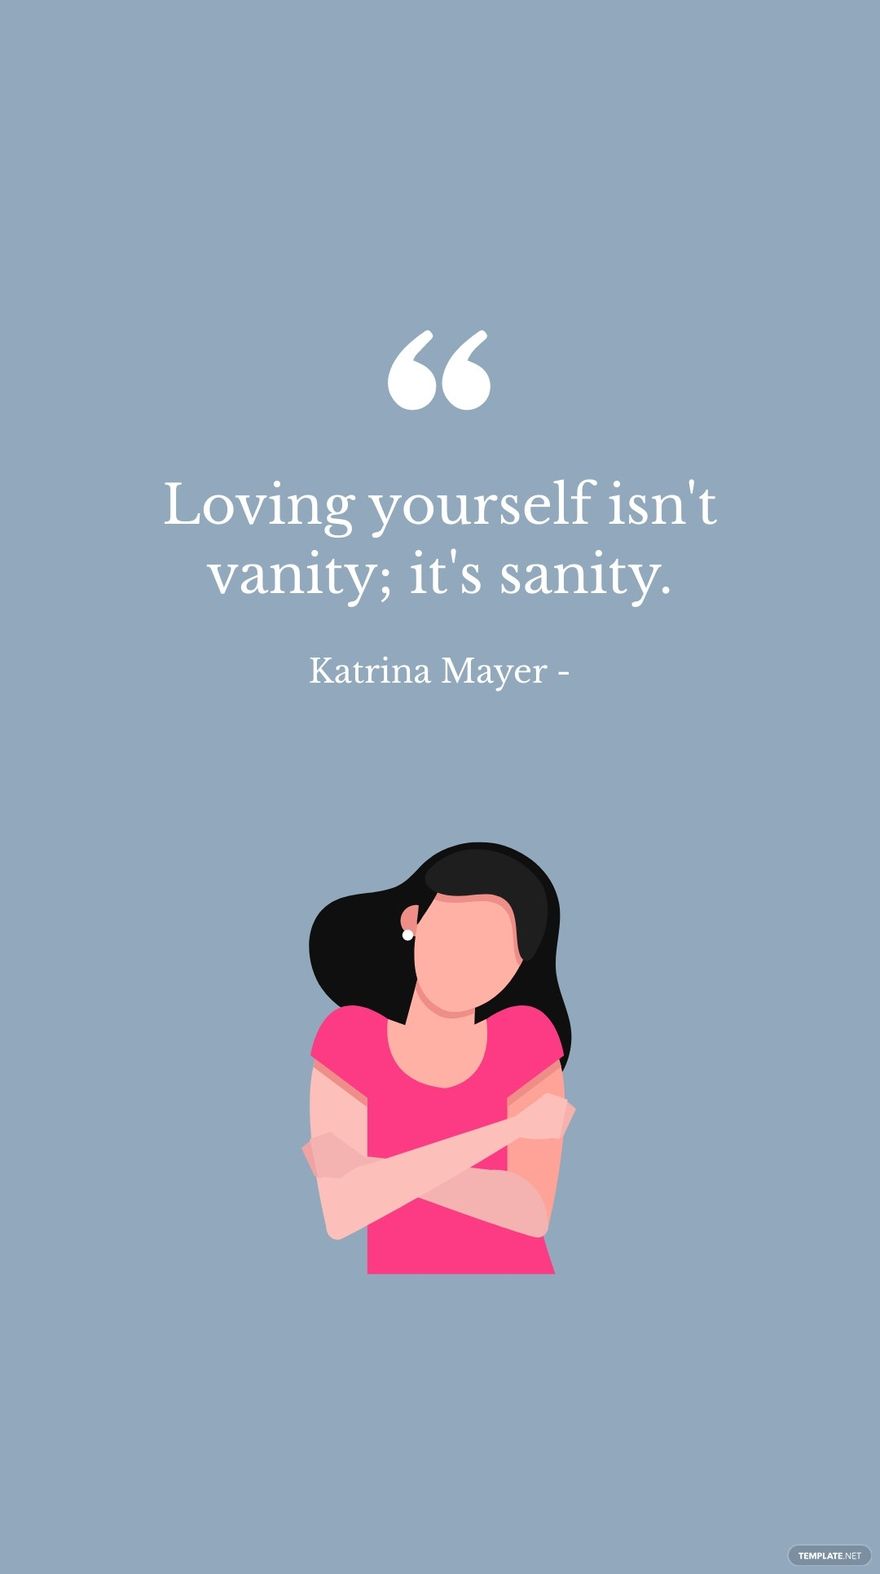 Free Katrina Mayer - Loving yourself isn't vanity; it's sanity. in JPG